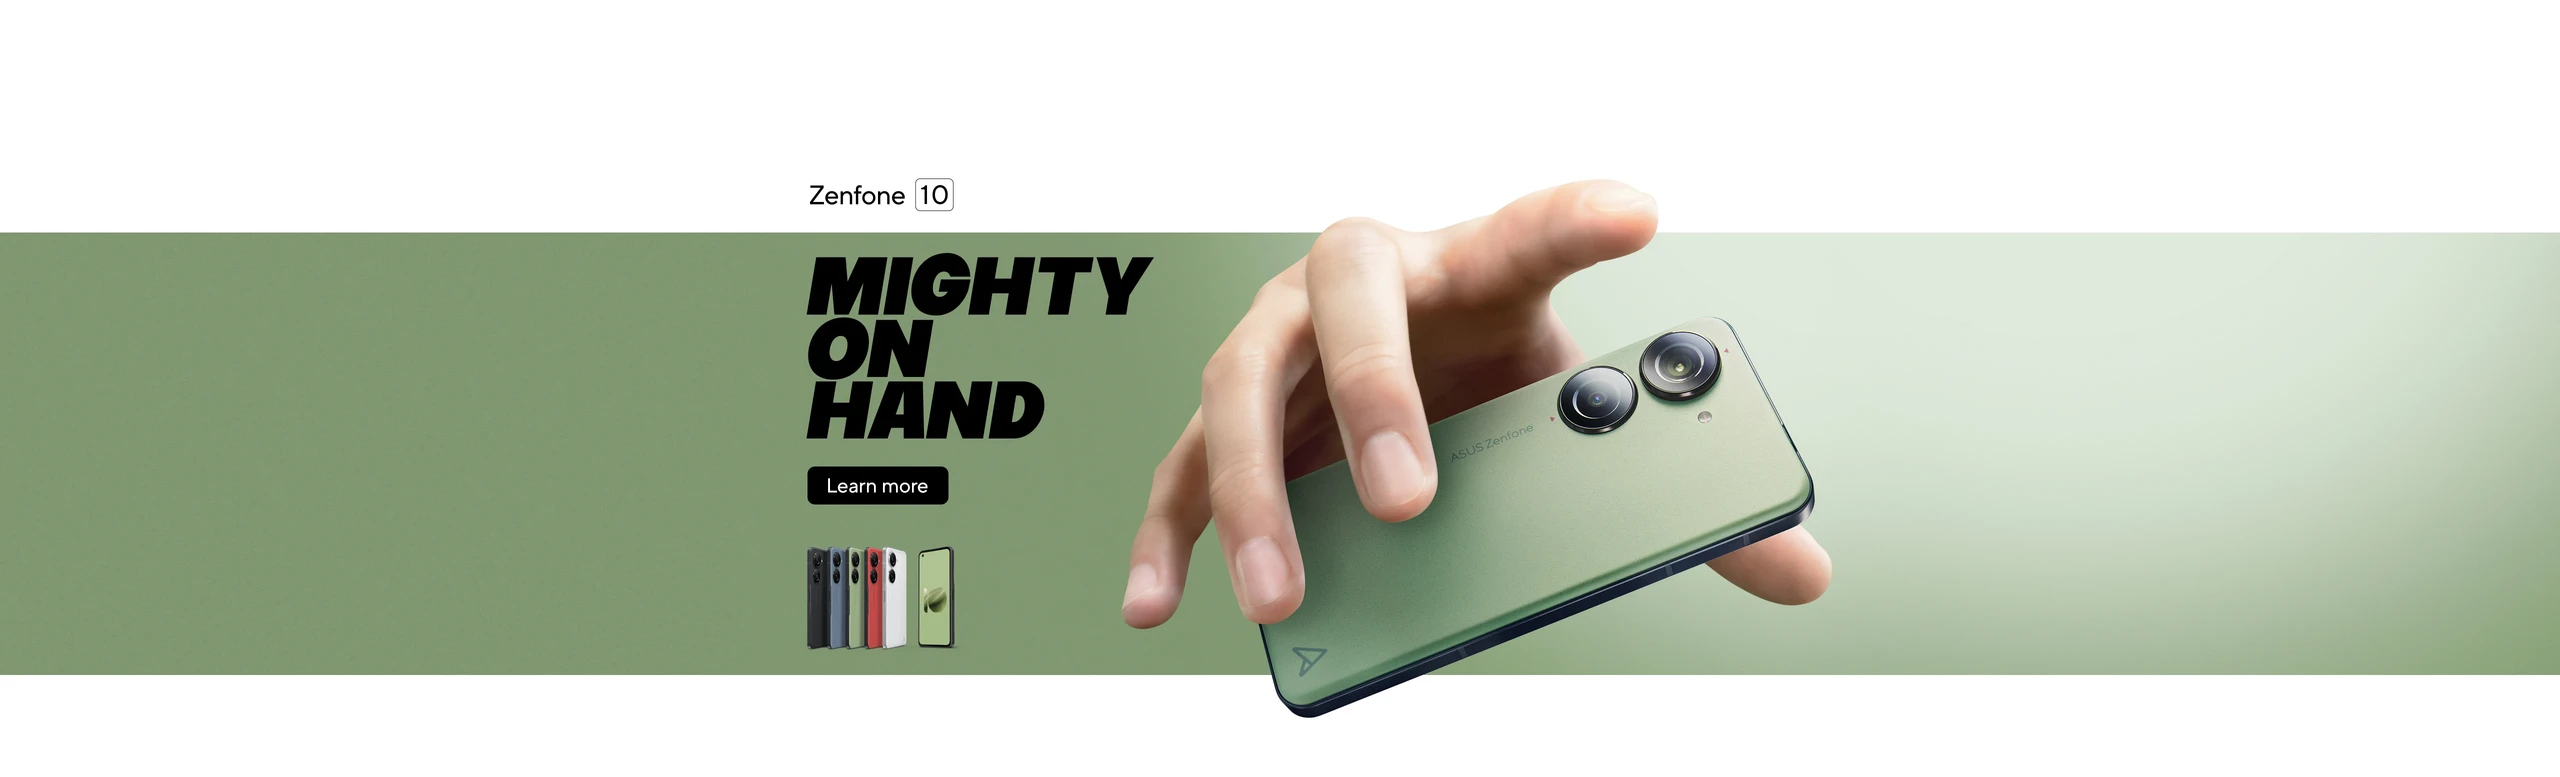 Zenfone 10. MIGHTY ON HAND.